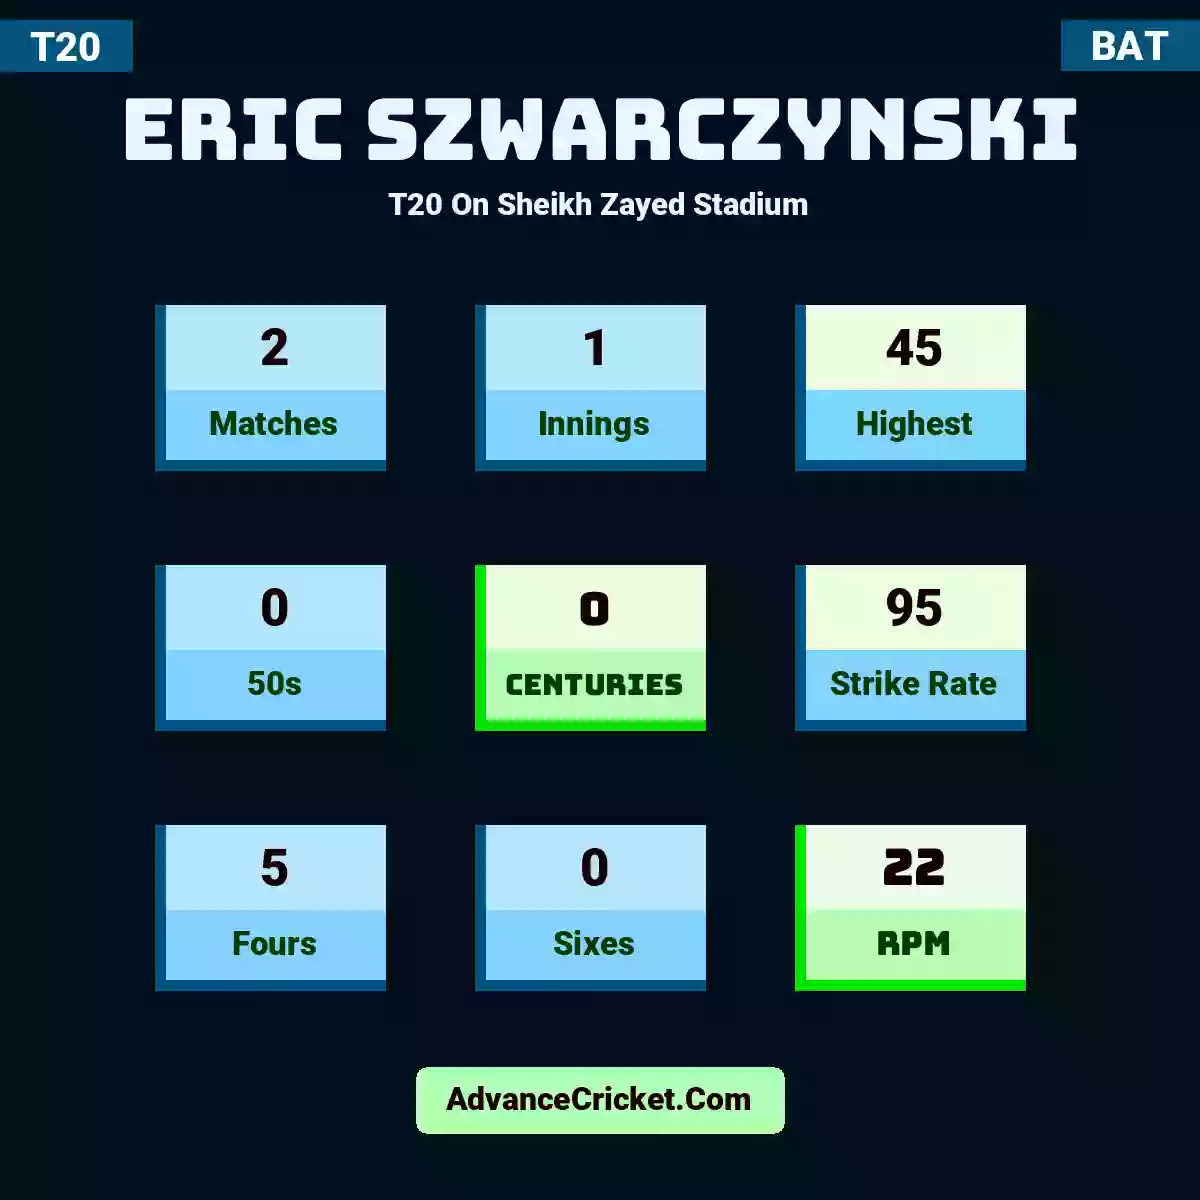 Eric Szwarczynski T20  On Sheikh Zayed Stadium, Eric Szwarczynski played 2 matches, scored 45 runs as highest, 0 half-centuries, and 0 centuries, with a strike rate of 95. E.Szwarczynski hit 5 fours and 0 sixes, with an RPM of 22.